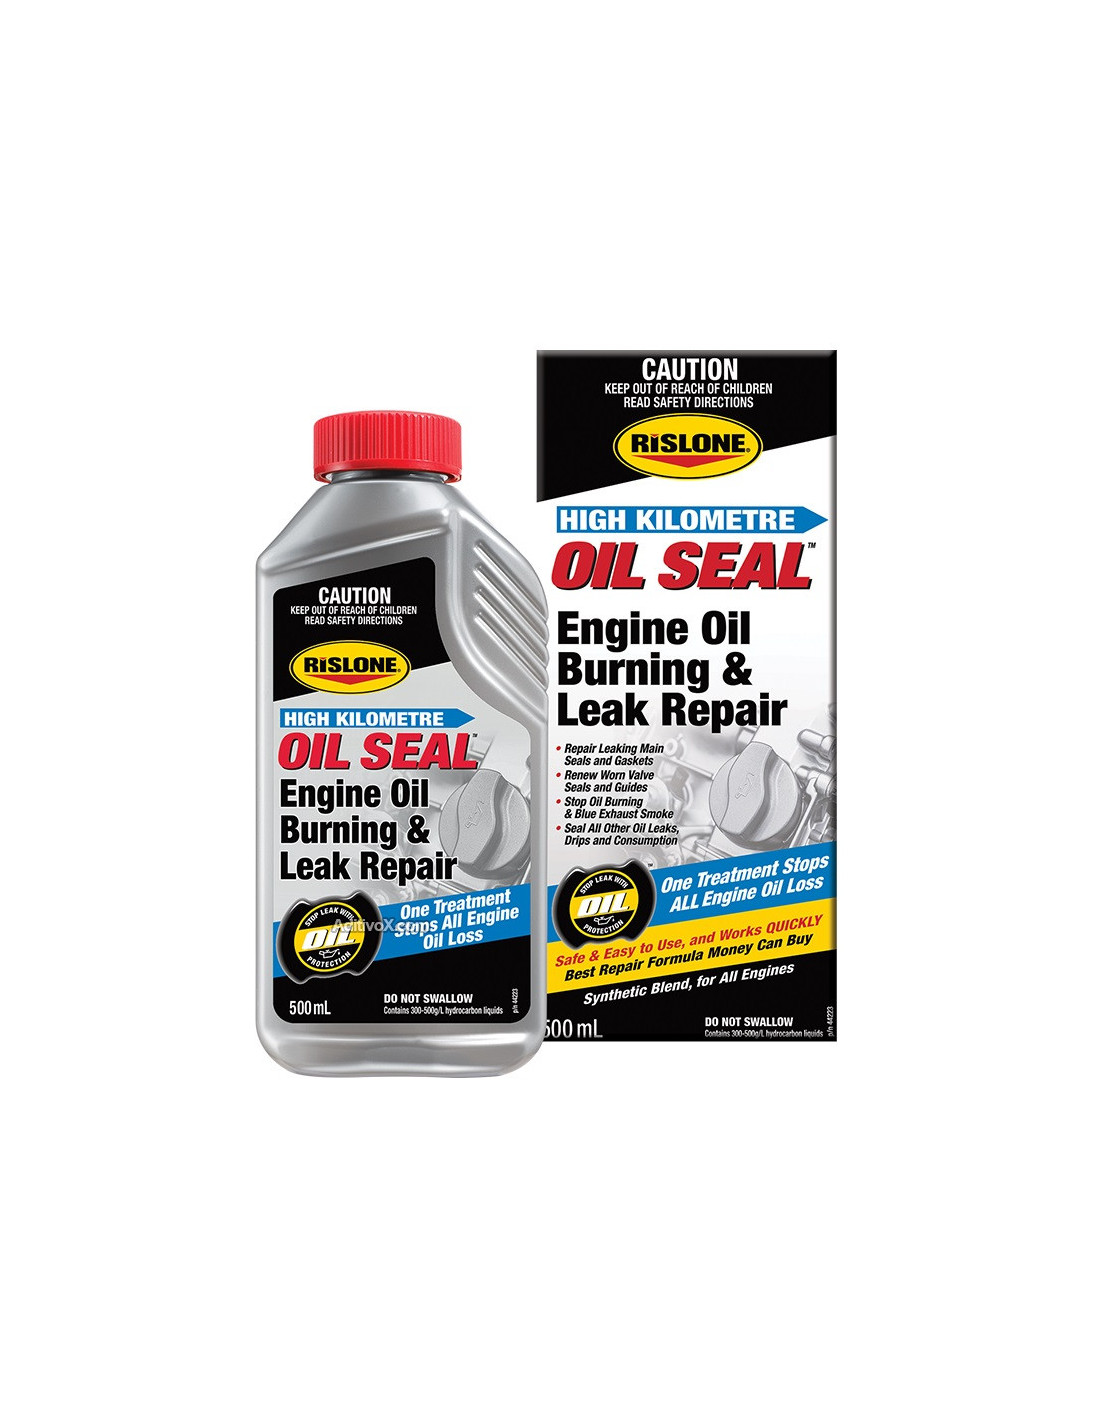 Comprar Rislone Oil Seal | Compralubricantes.com